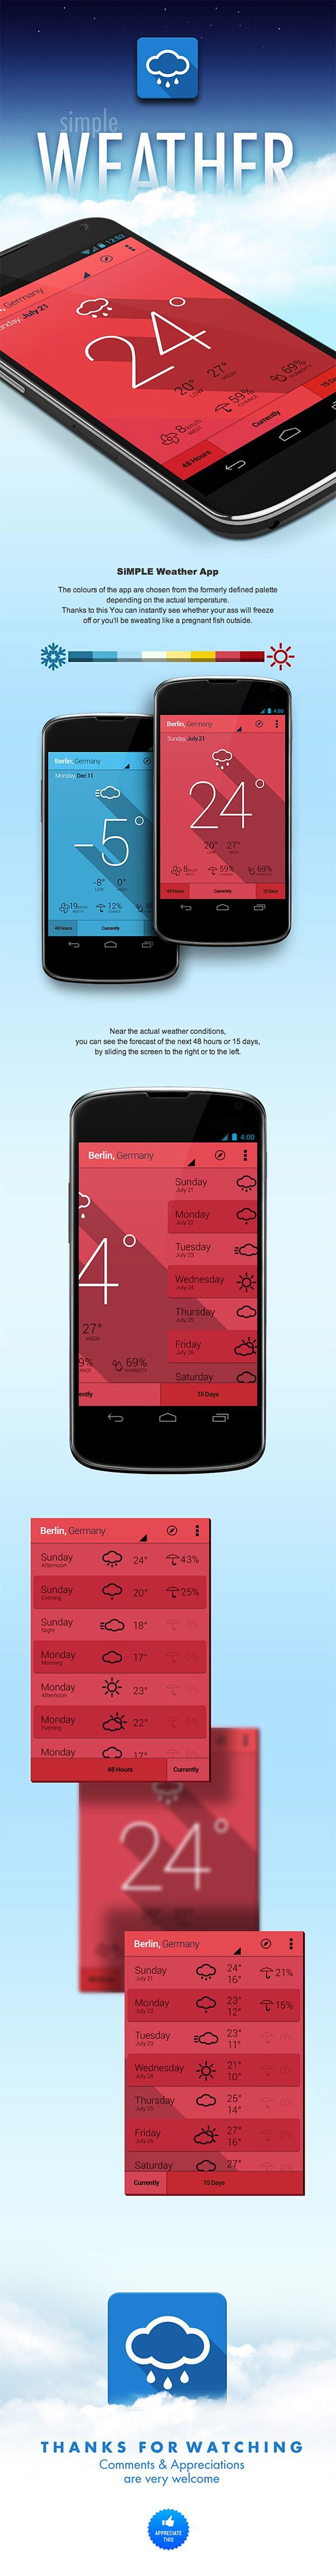 SiMPLE Weather App f...